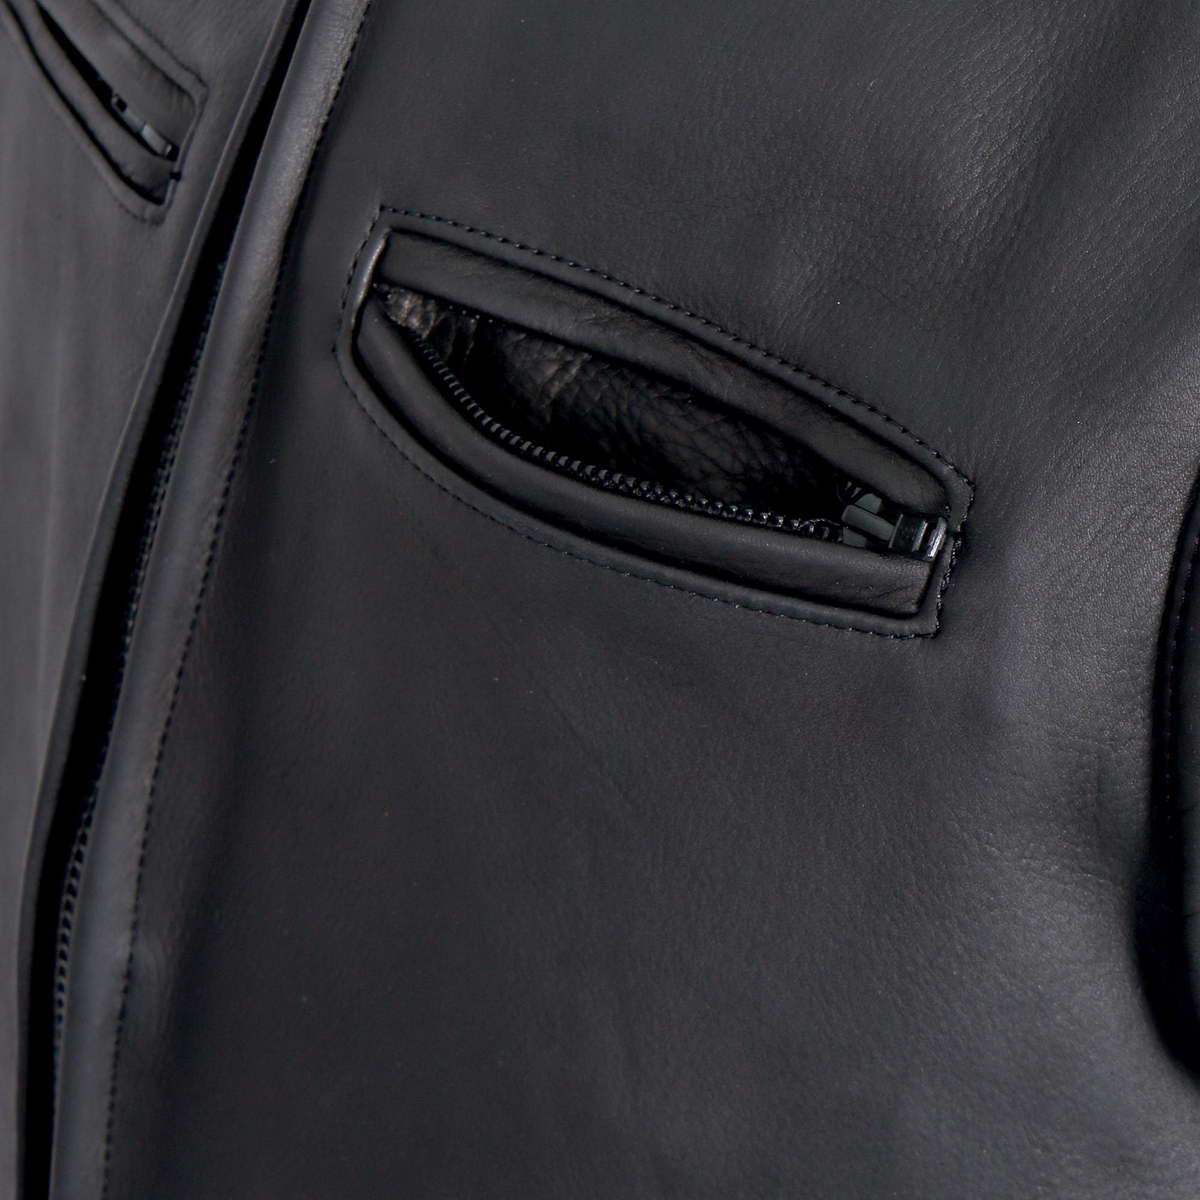 Hot Leathers VSM5001 USA Made Men's Black Premium Steerhide Leather Club Style Vest